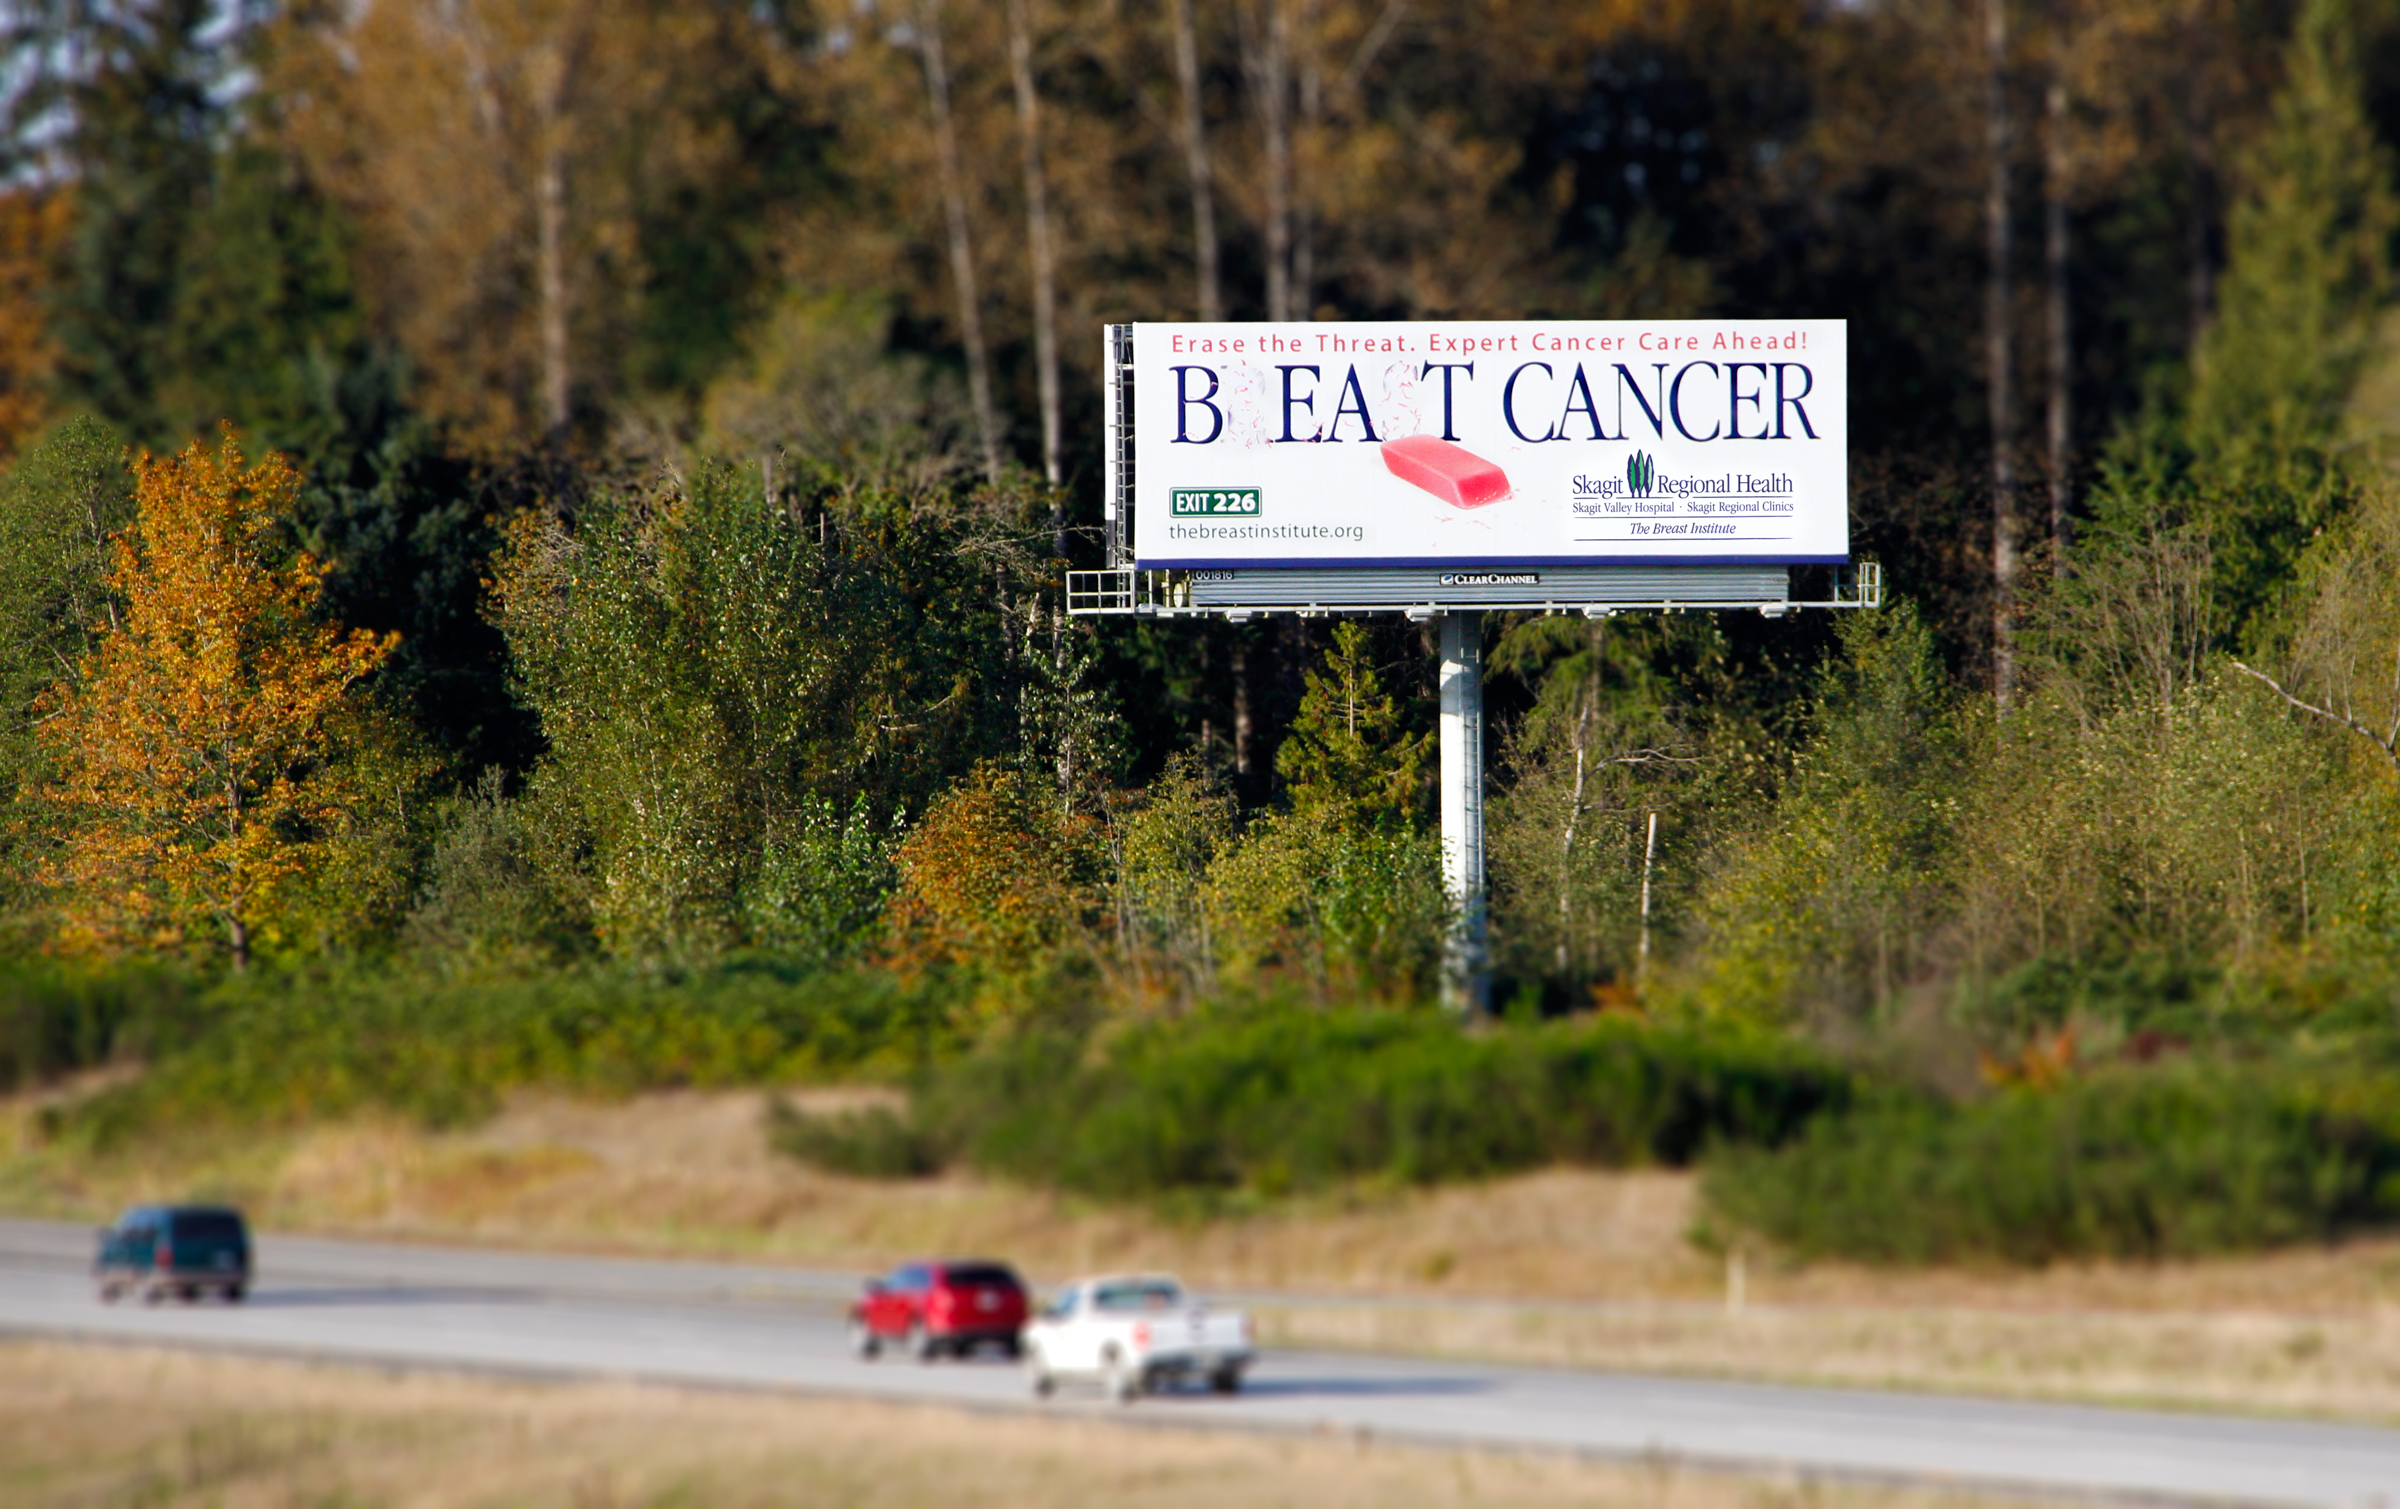 Skagit Regional Health Erase Breast Cancer Campaign Billboard on Northbound I-5